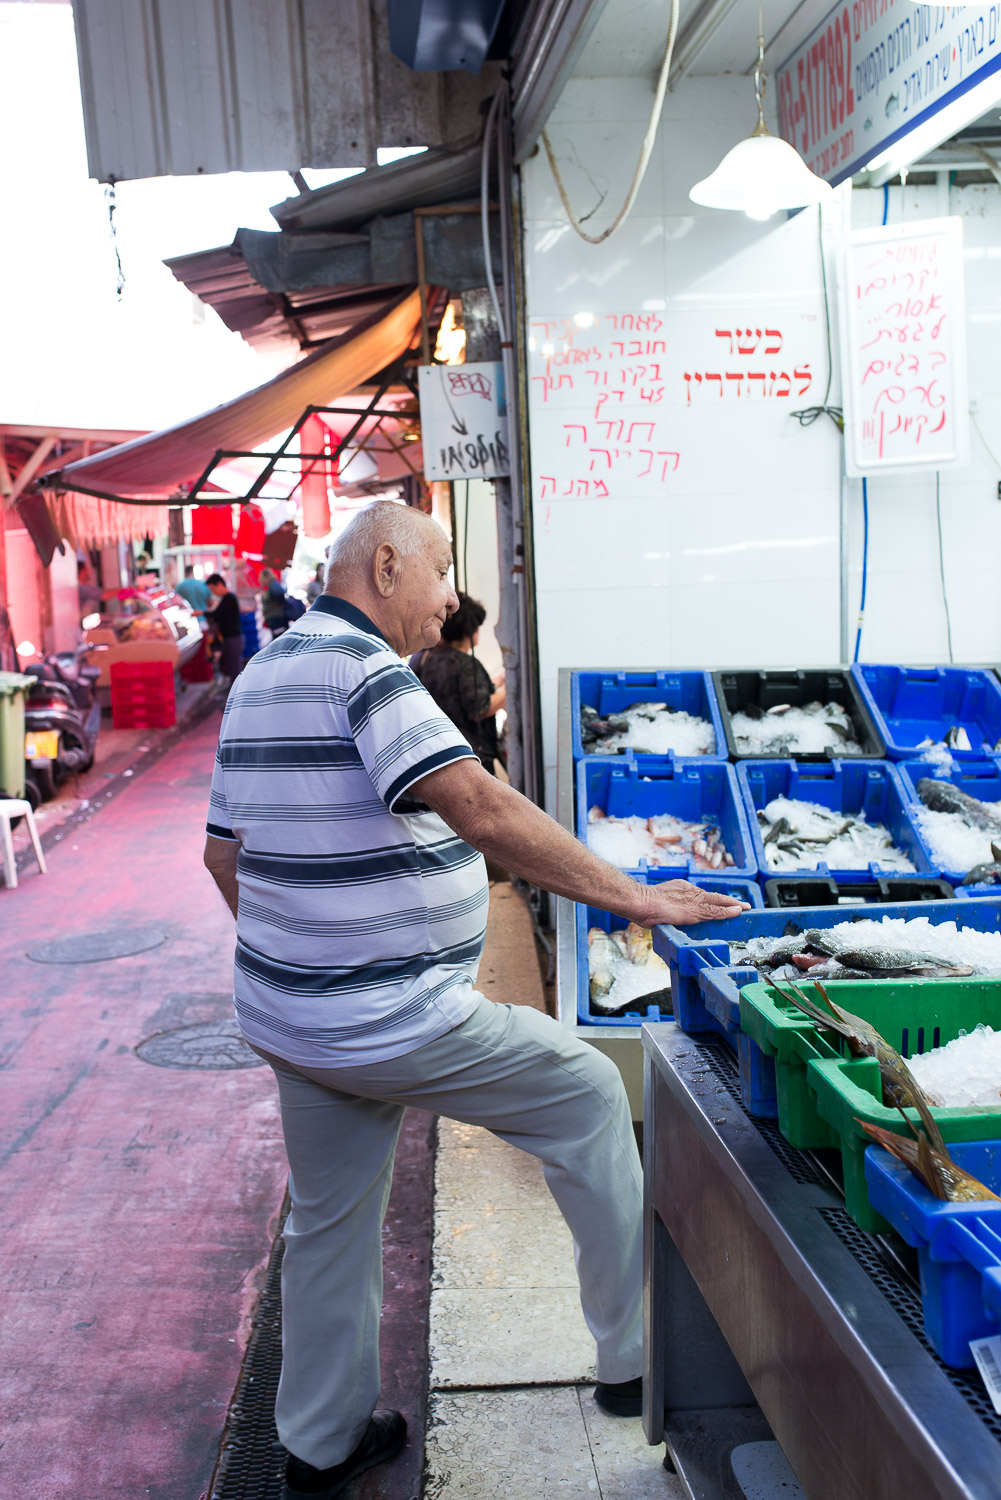 Carmel Market, Shuk HaCarmel. Tel Aviv, Israel